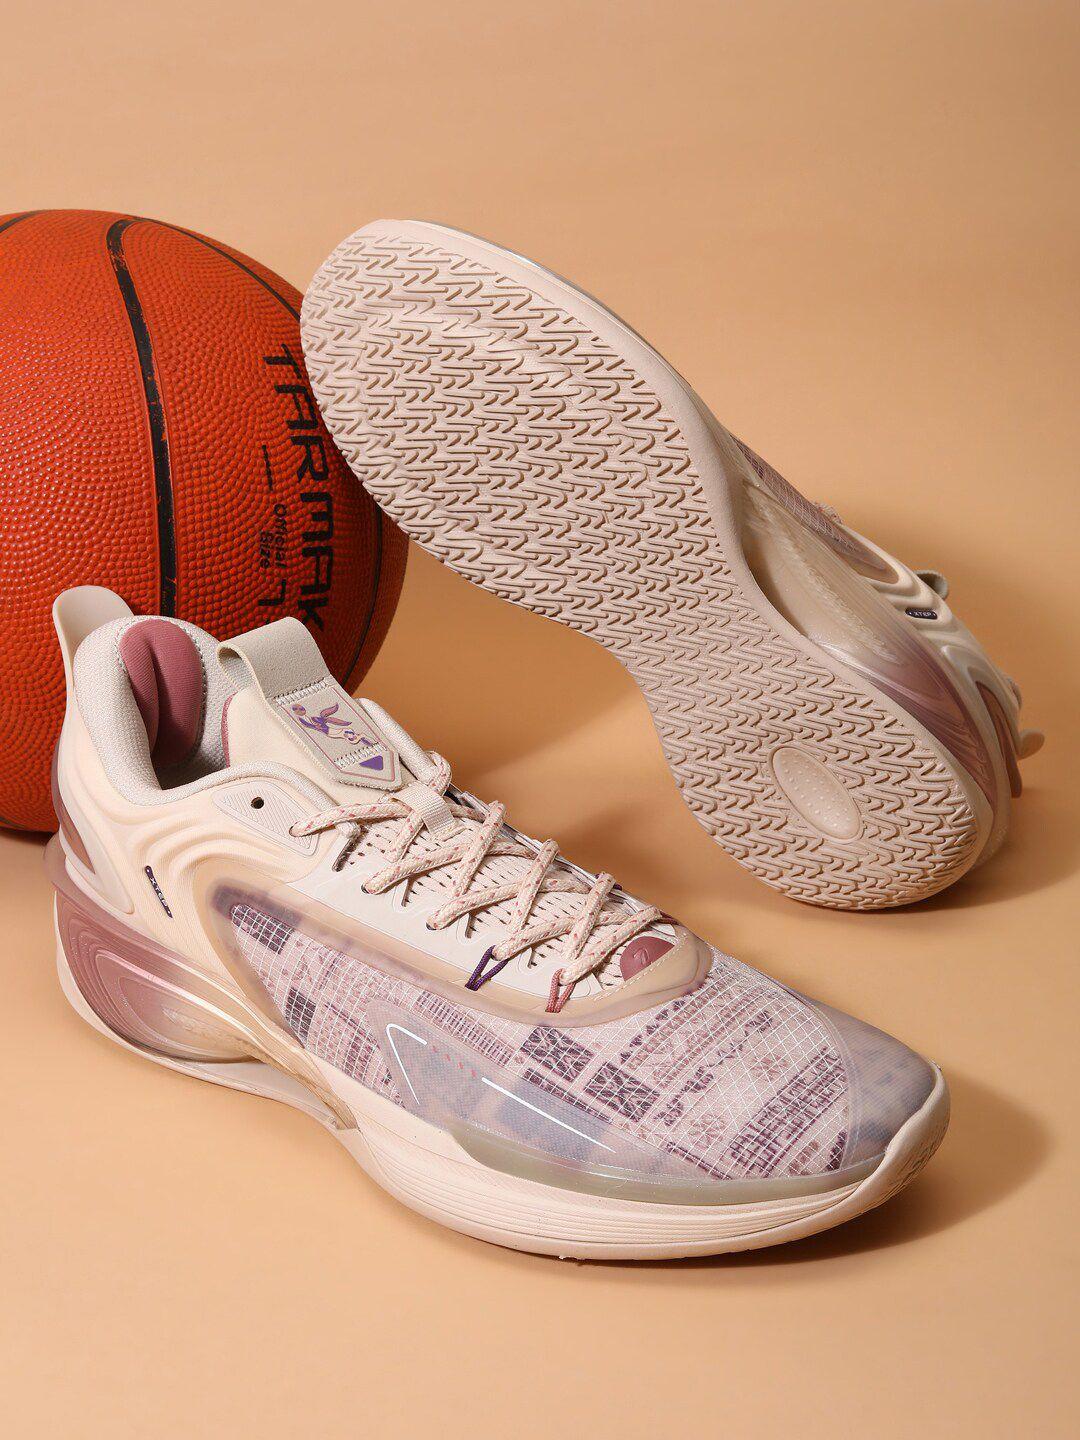 xtep men levitation 7 lightweight textile super grip eva basketball shoes